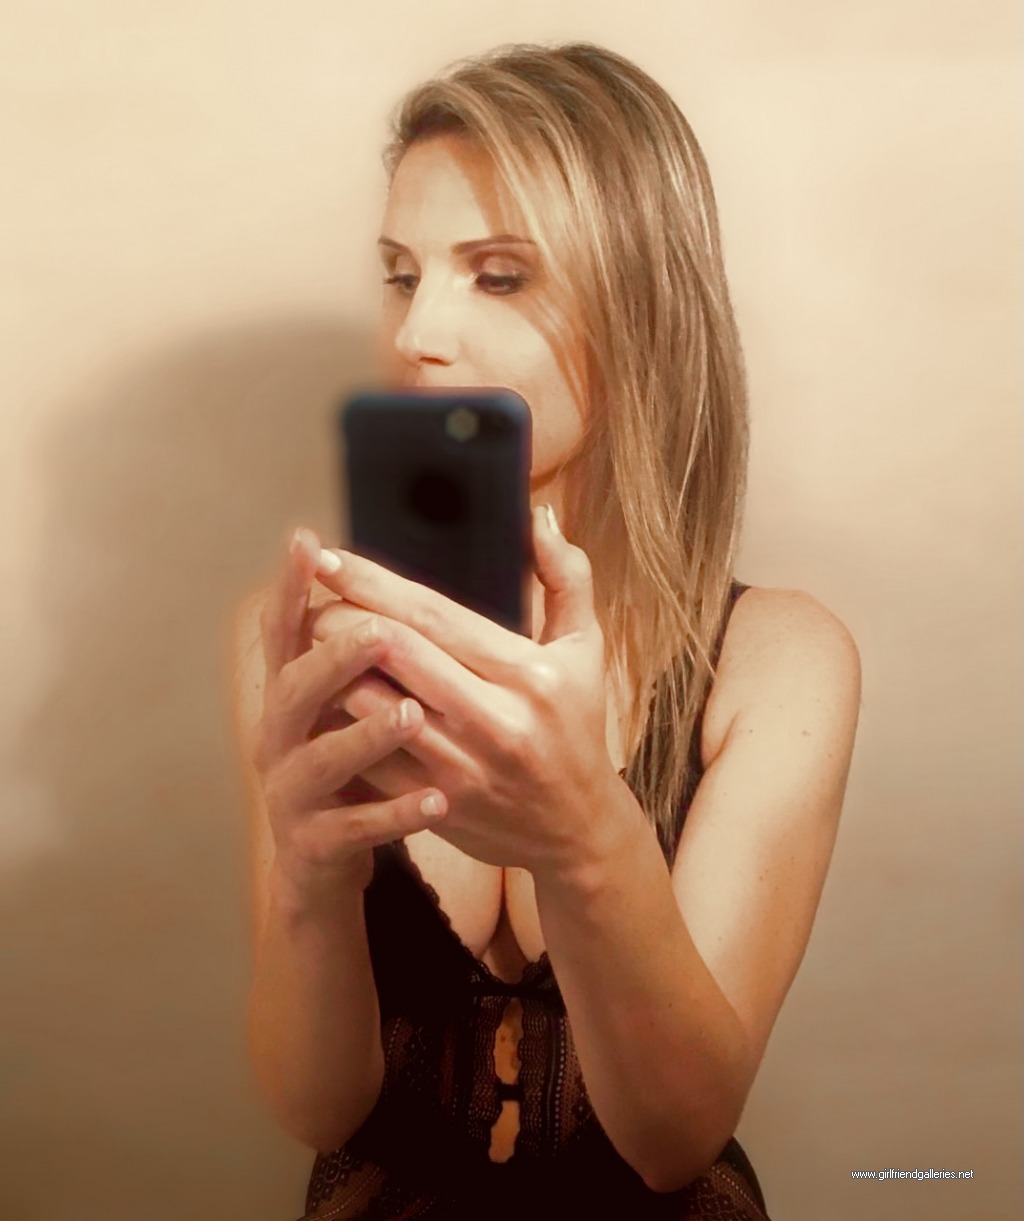 Selfie time!! Heidi HotWife - I love to expose myself! Me encant